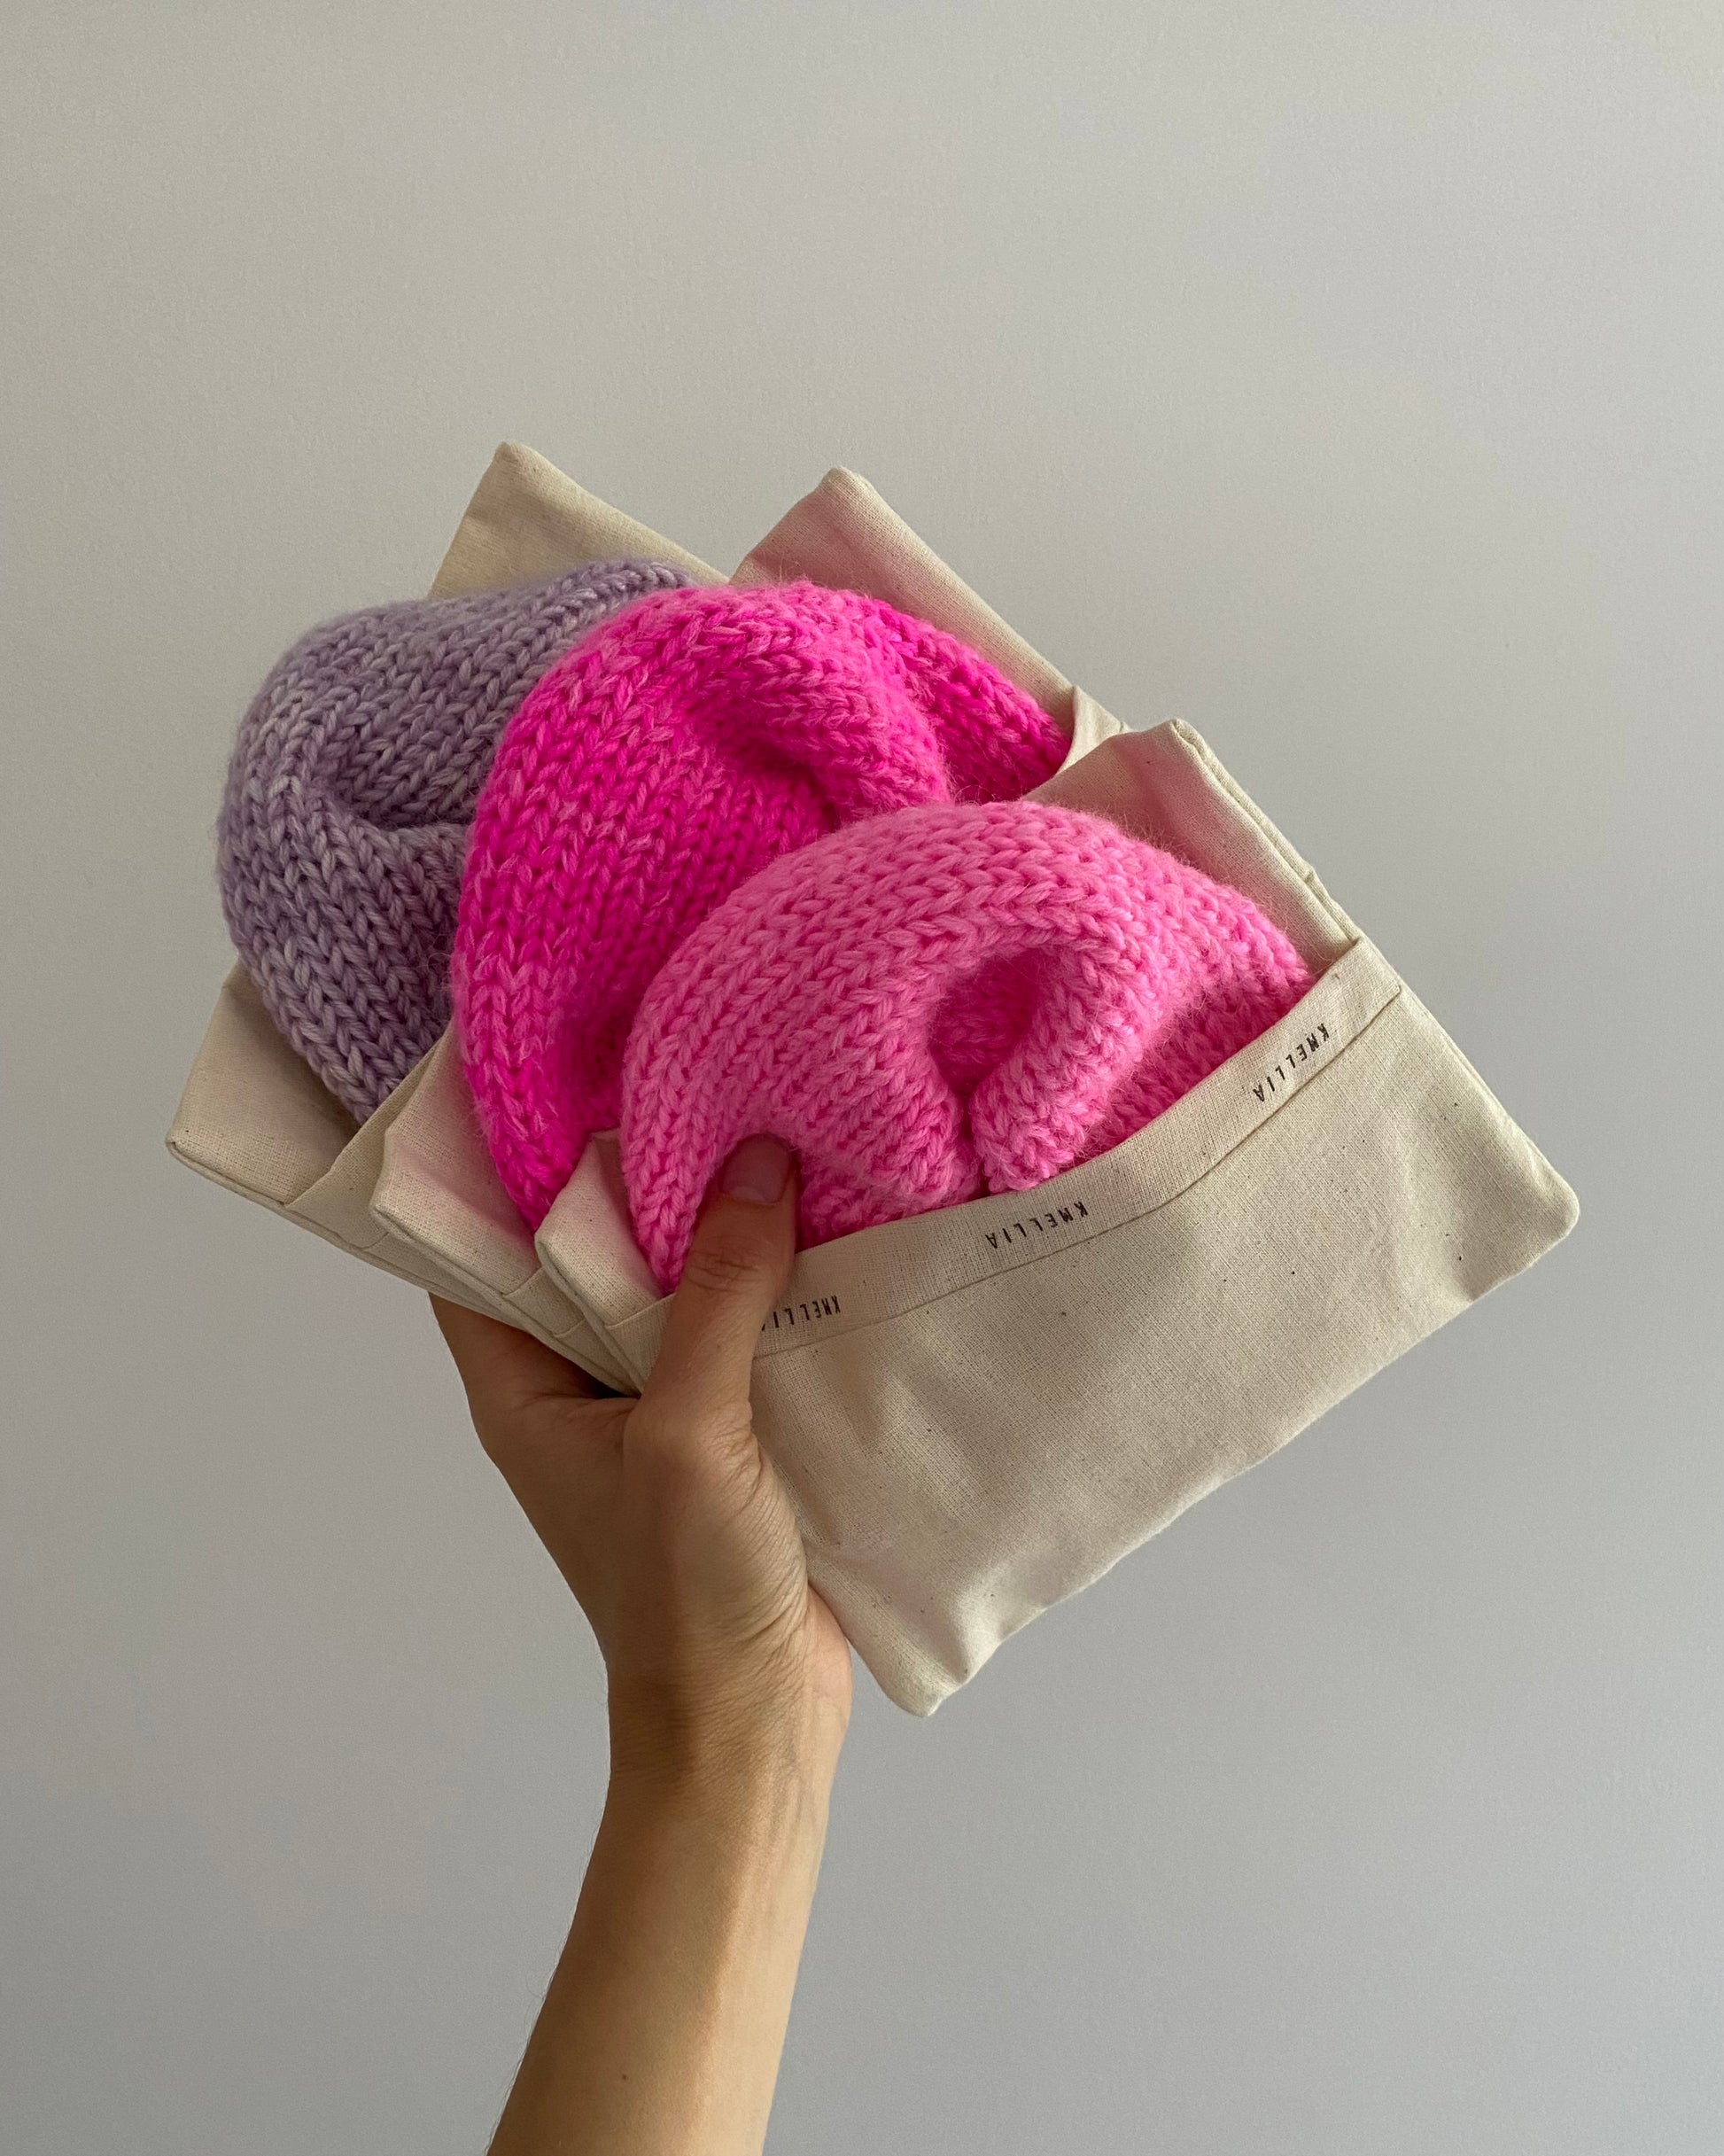 KMELLIA Hand Dyed Oversized Knitted Wool Chouchou Scrunchie